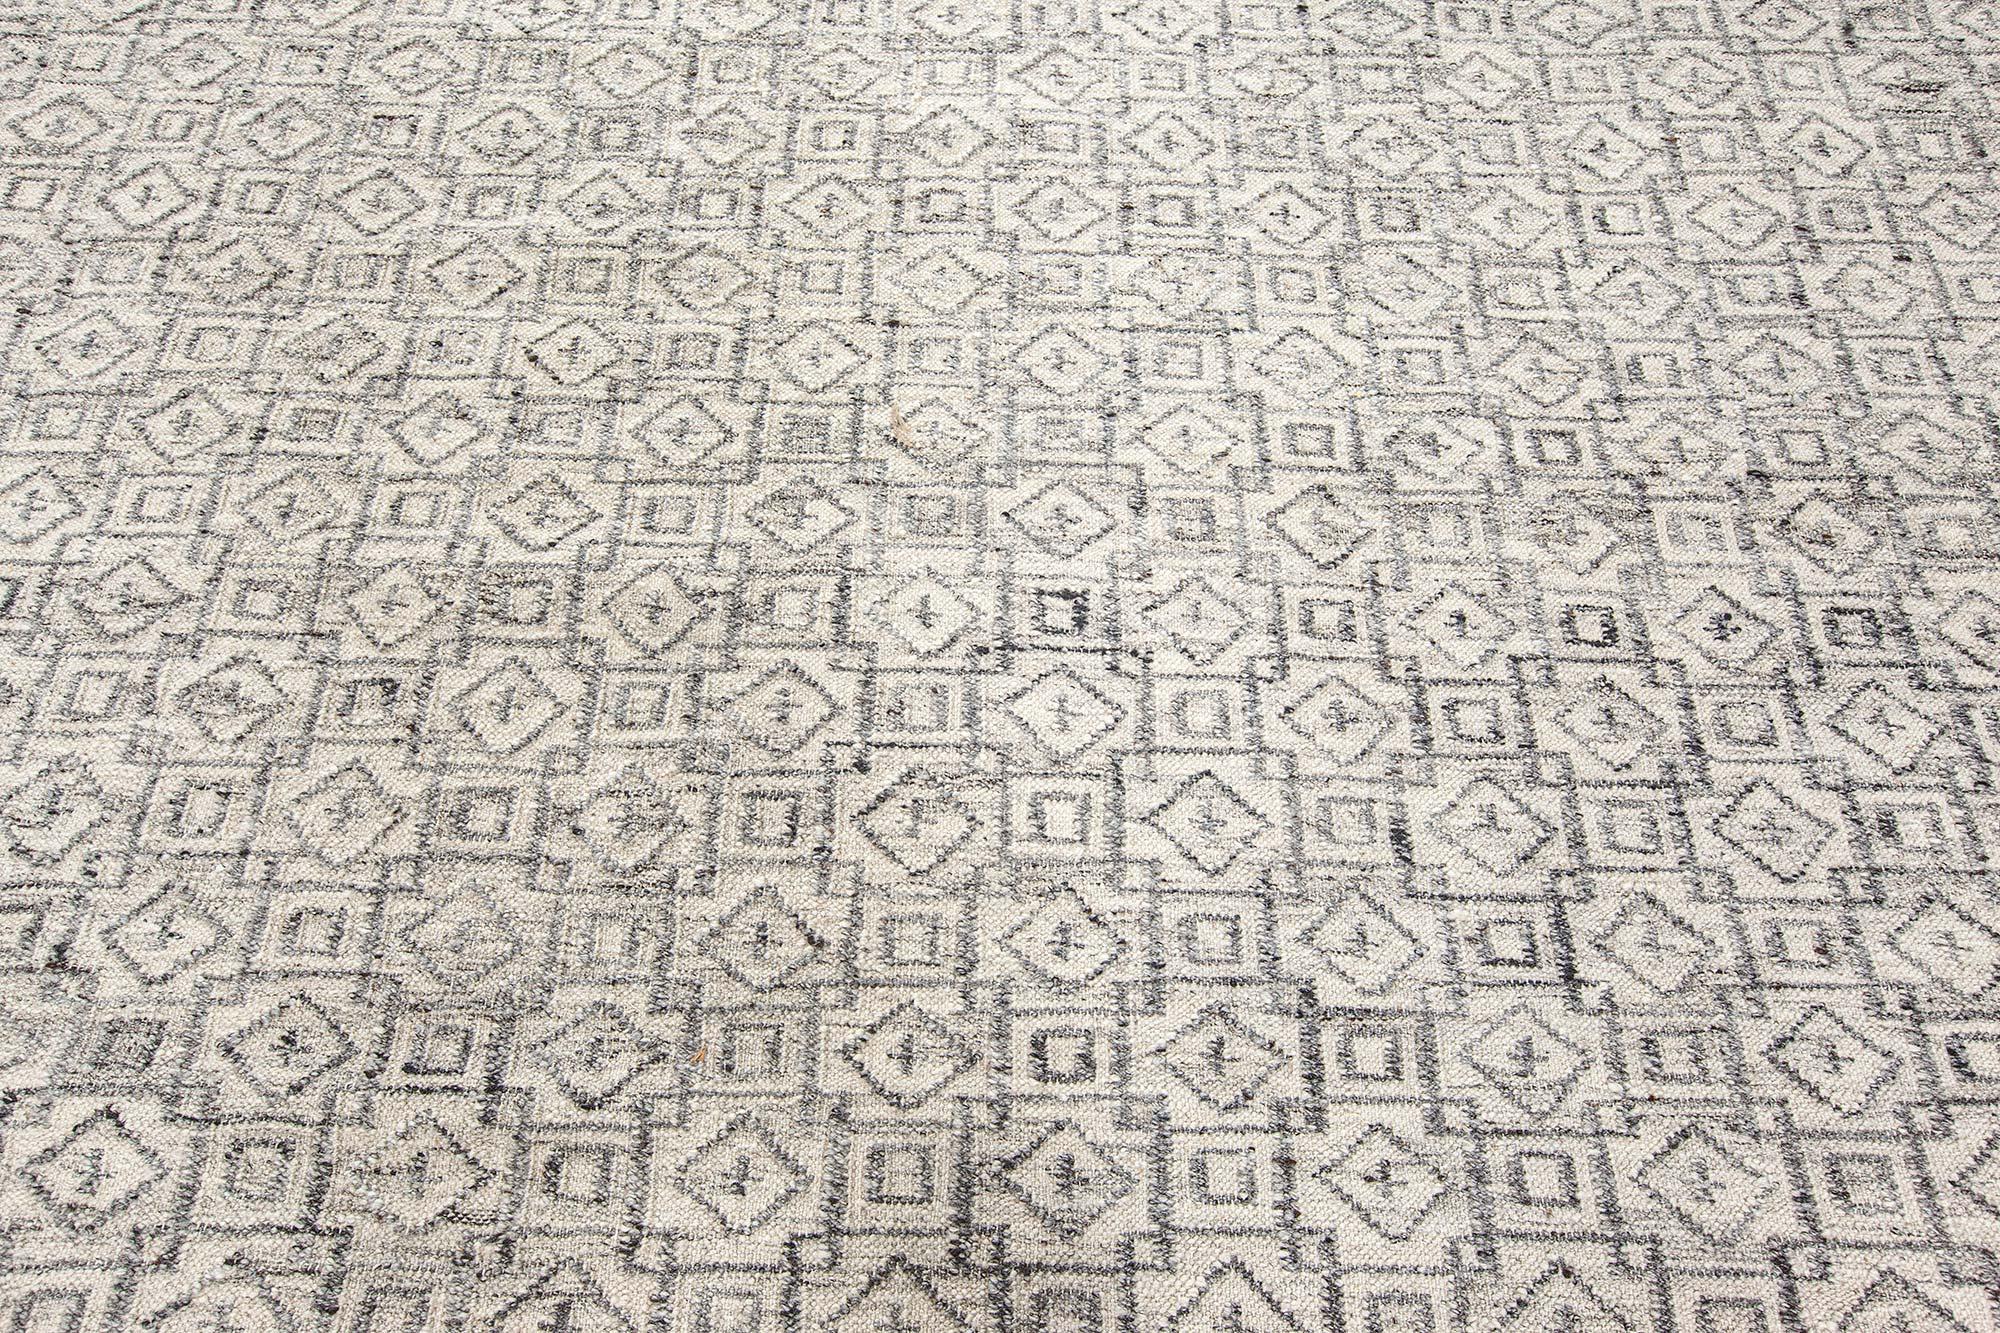 Modern traditional inspired rug by Doris Leslie Blau.
Size: 10'8